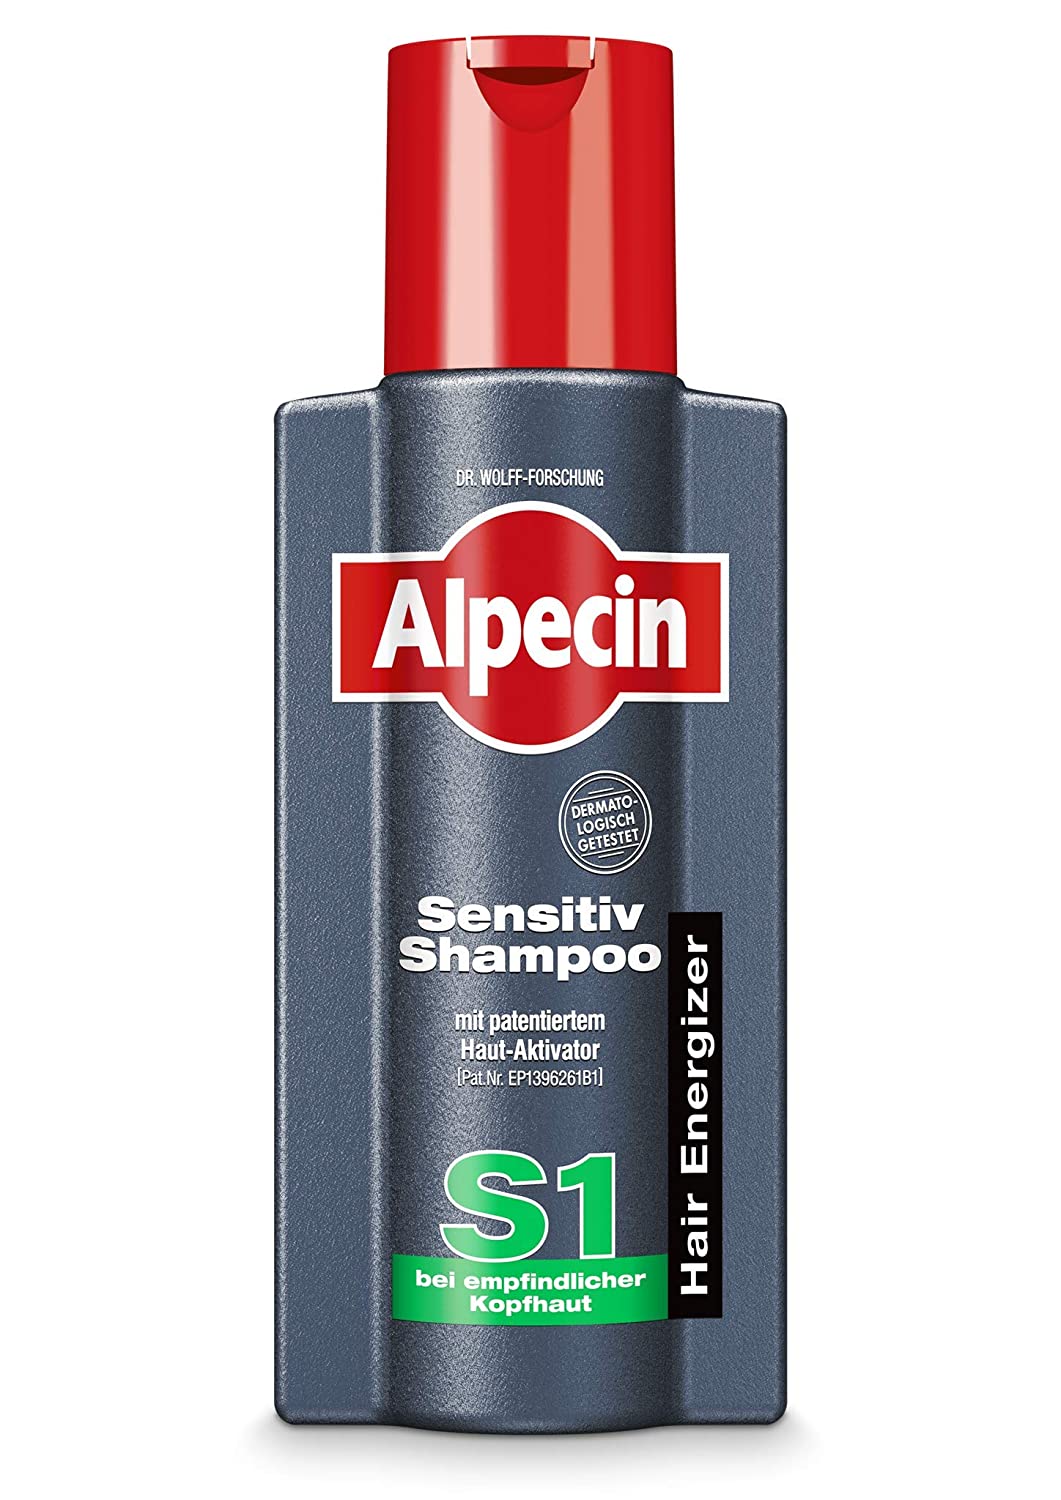 Alpecin S1 Sensitive Shampoo for Sensitive Hair, 250 ml, 